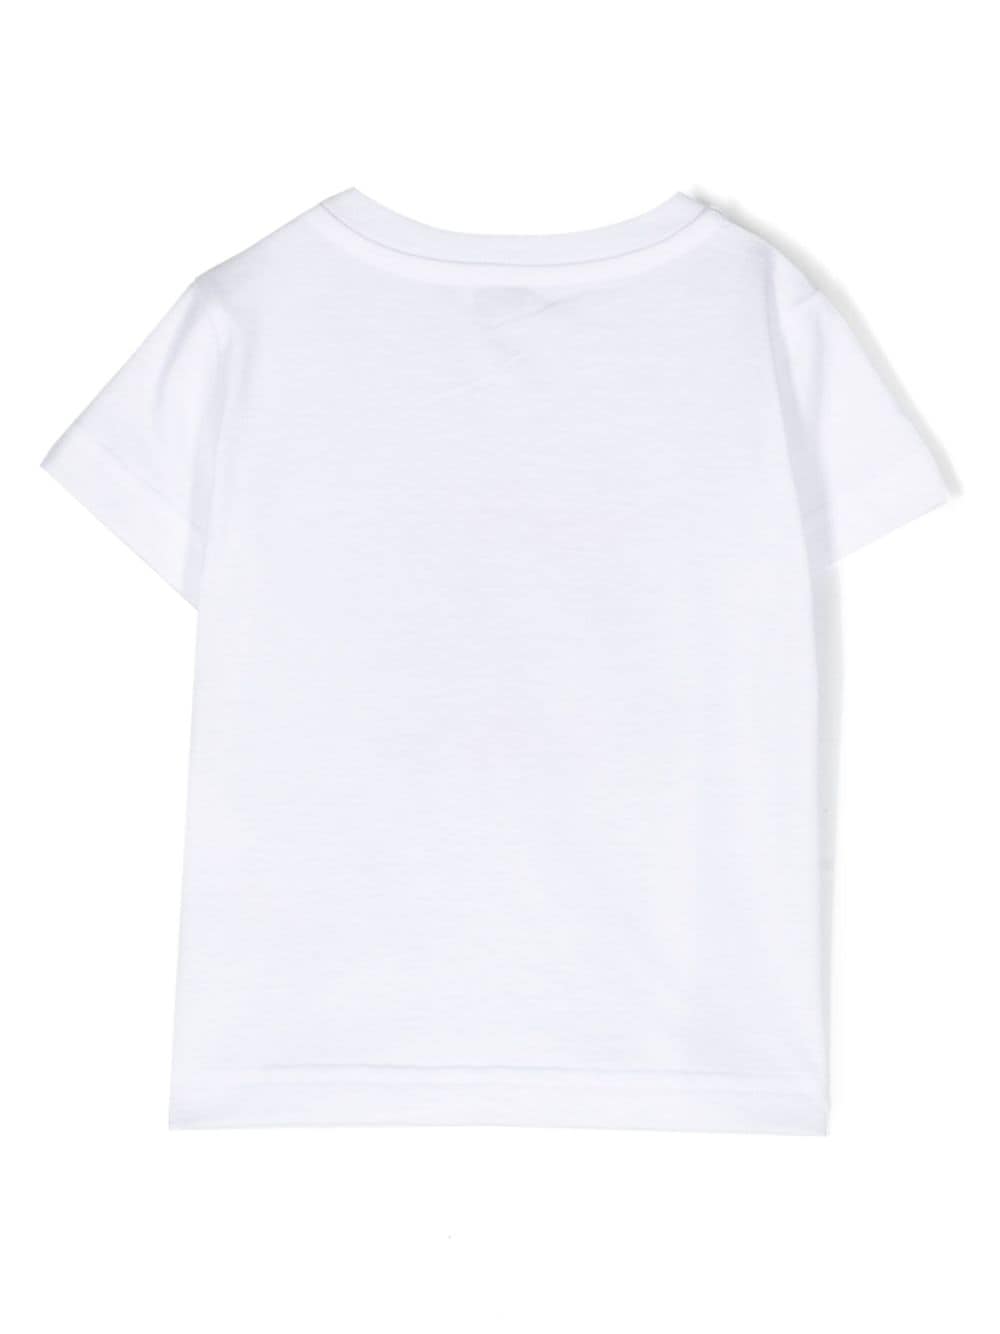 White t-shirt for newborns with print